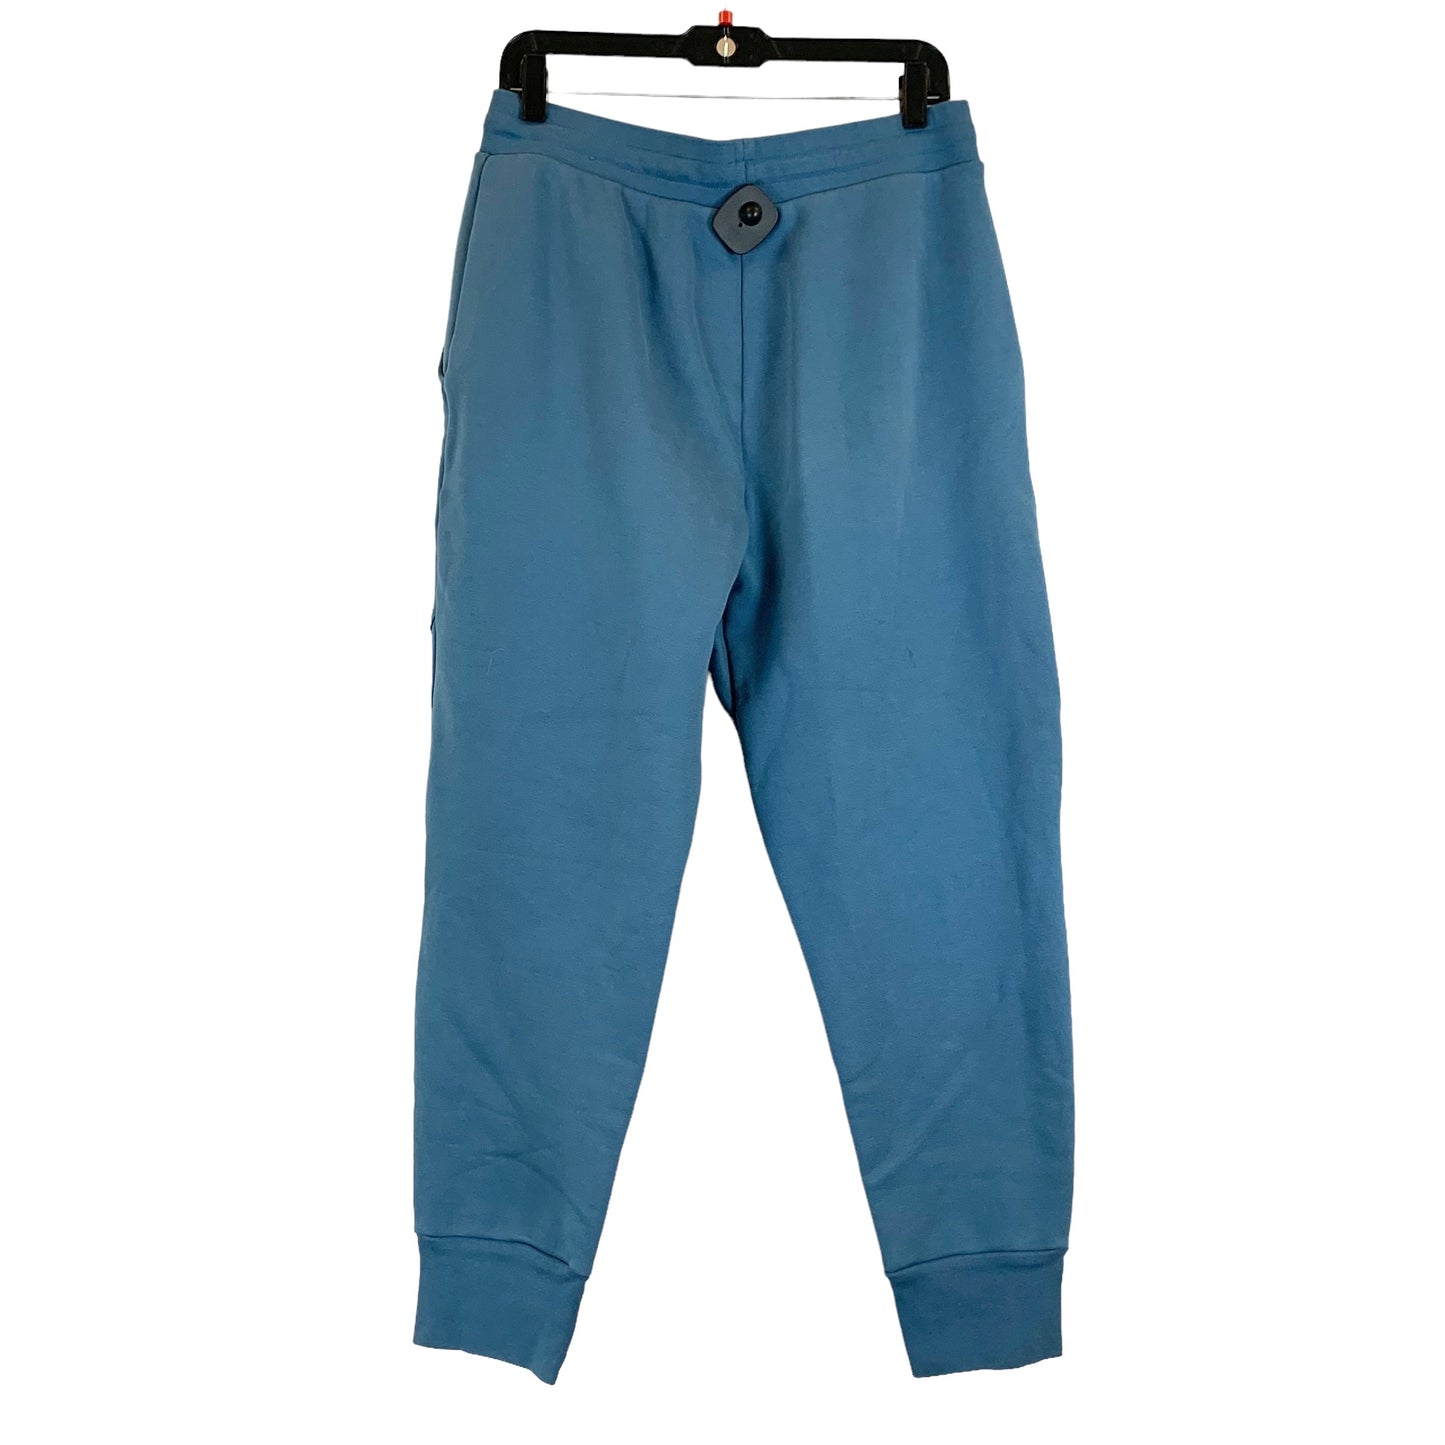 Blue Athletic Pants Adidas, Size L